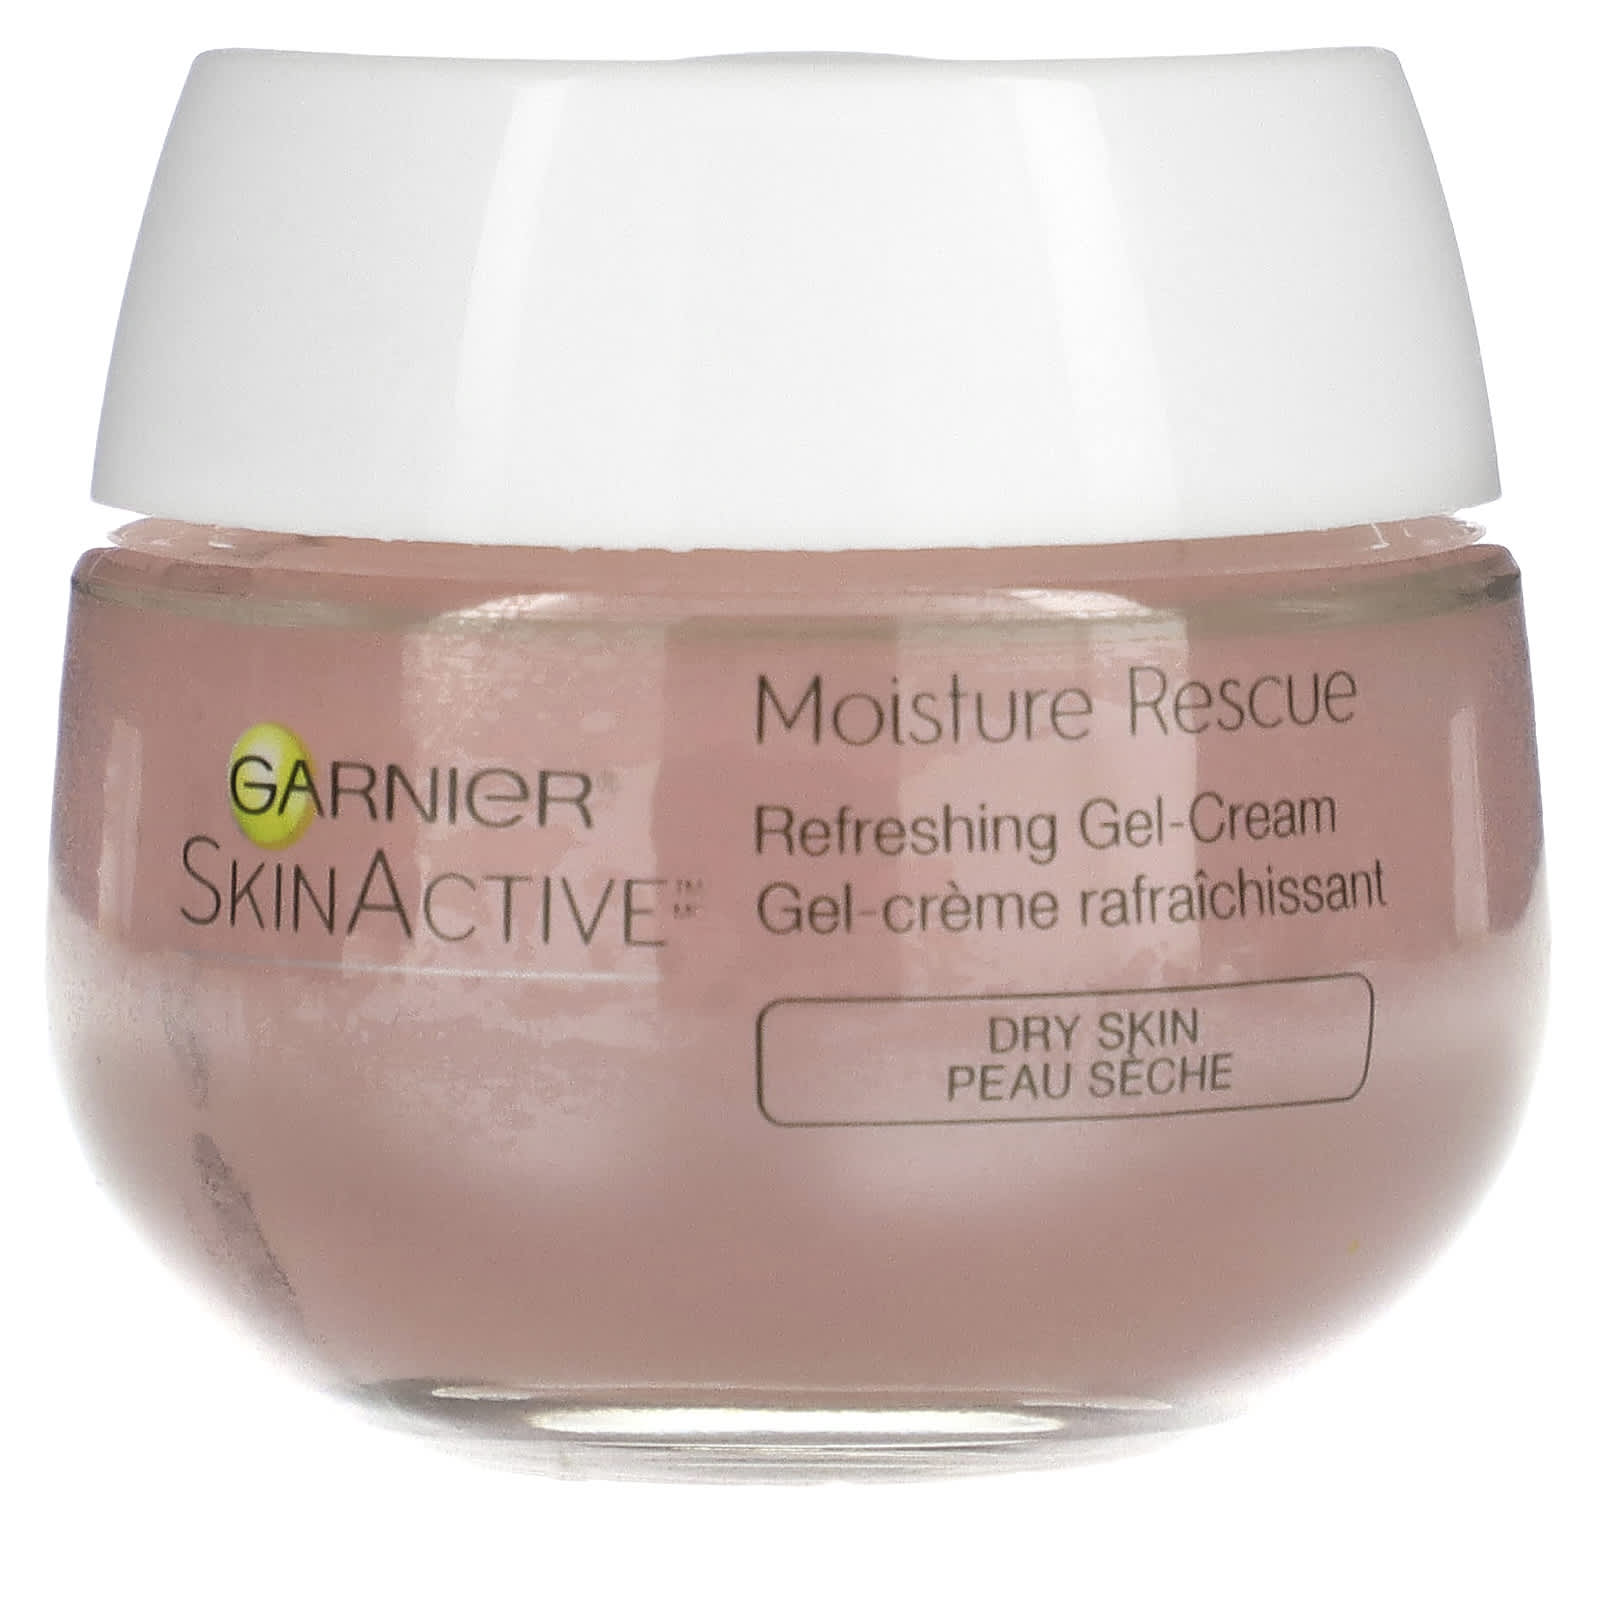 Garnier, SkinActive, Moisture Rescue Refreshing Gel-Cream, Dry Skin, 1. ...